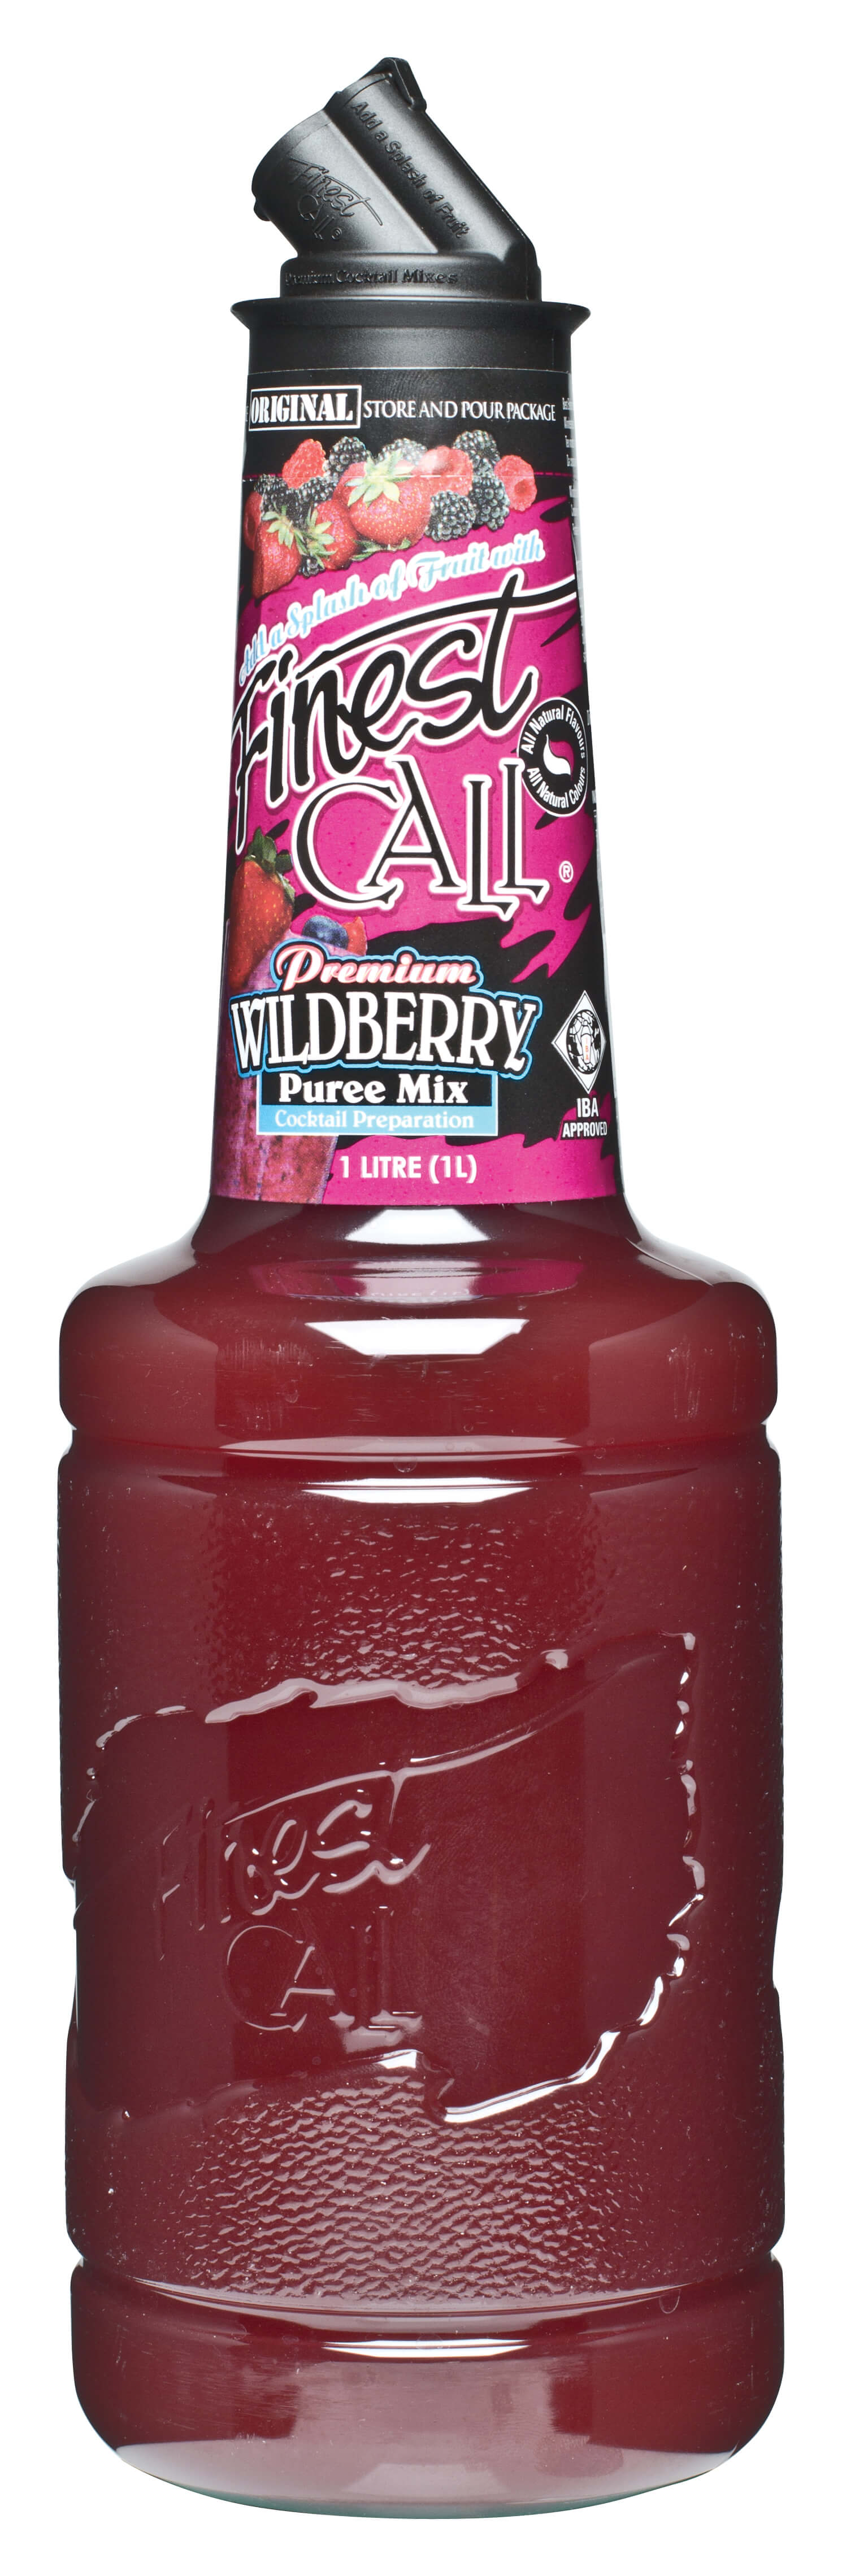 FinestCall - Fruit-Puree-Mix Wildberry (1,0l)